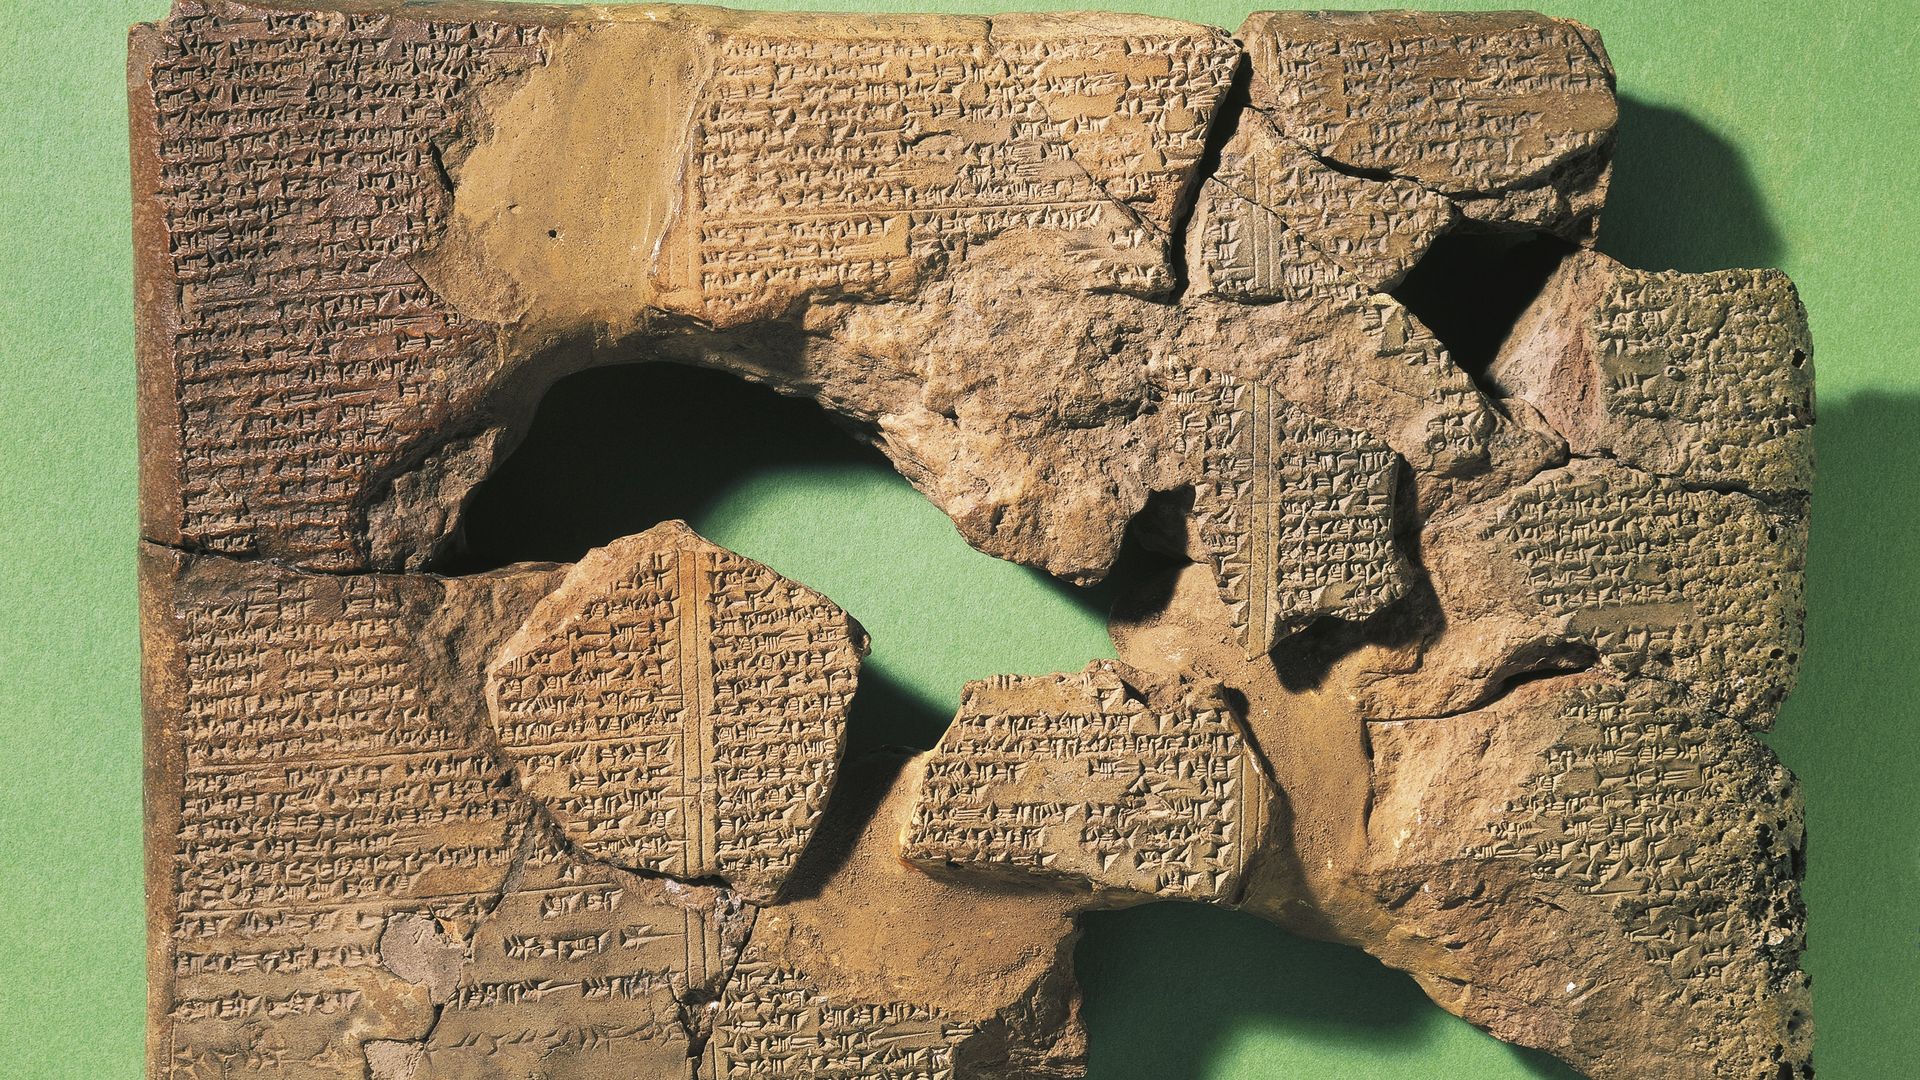 Cuneiform tablet relating part of the Epic of Gilgamesh